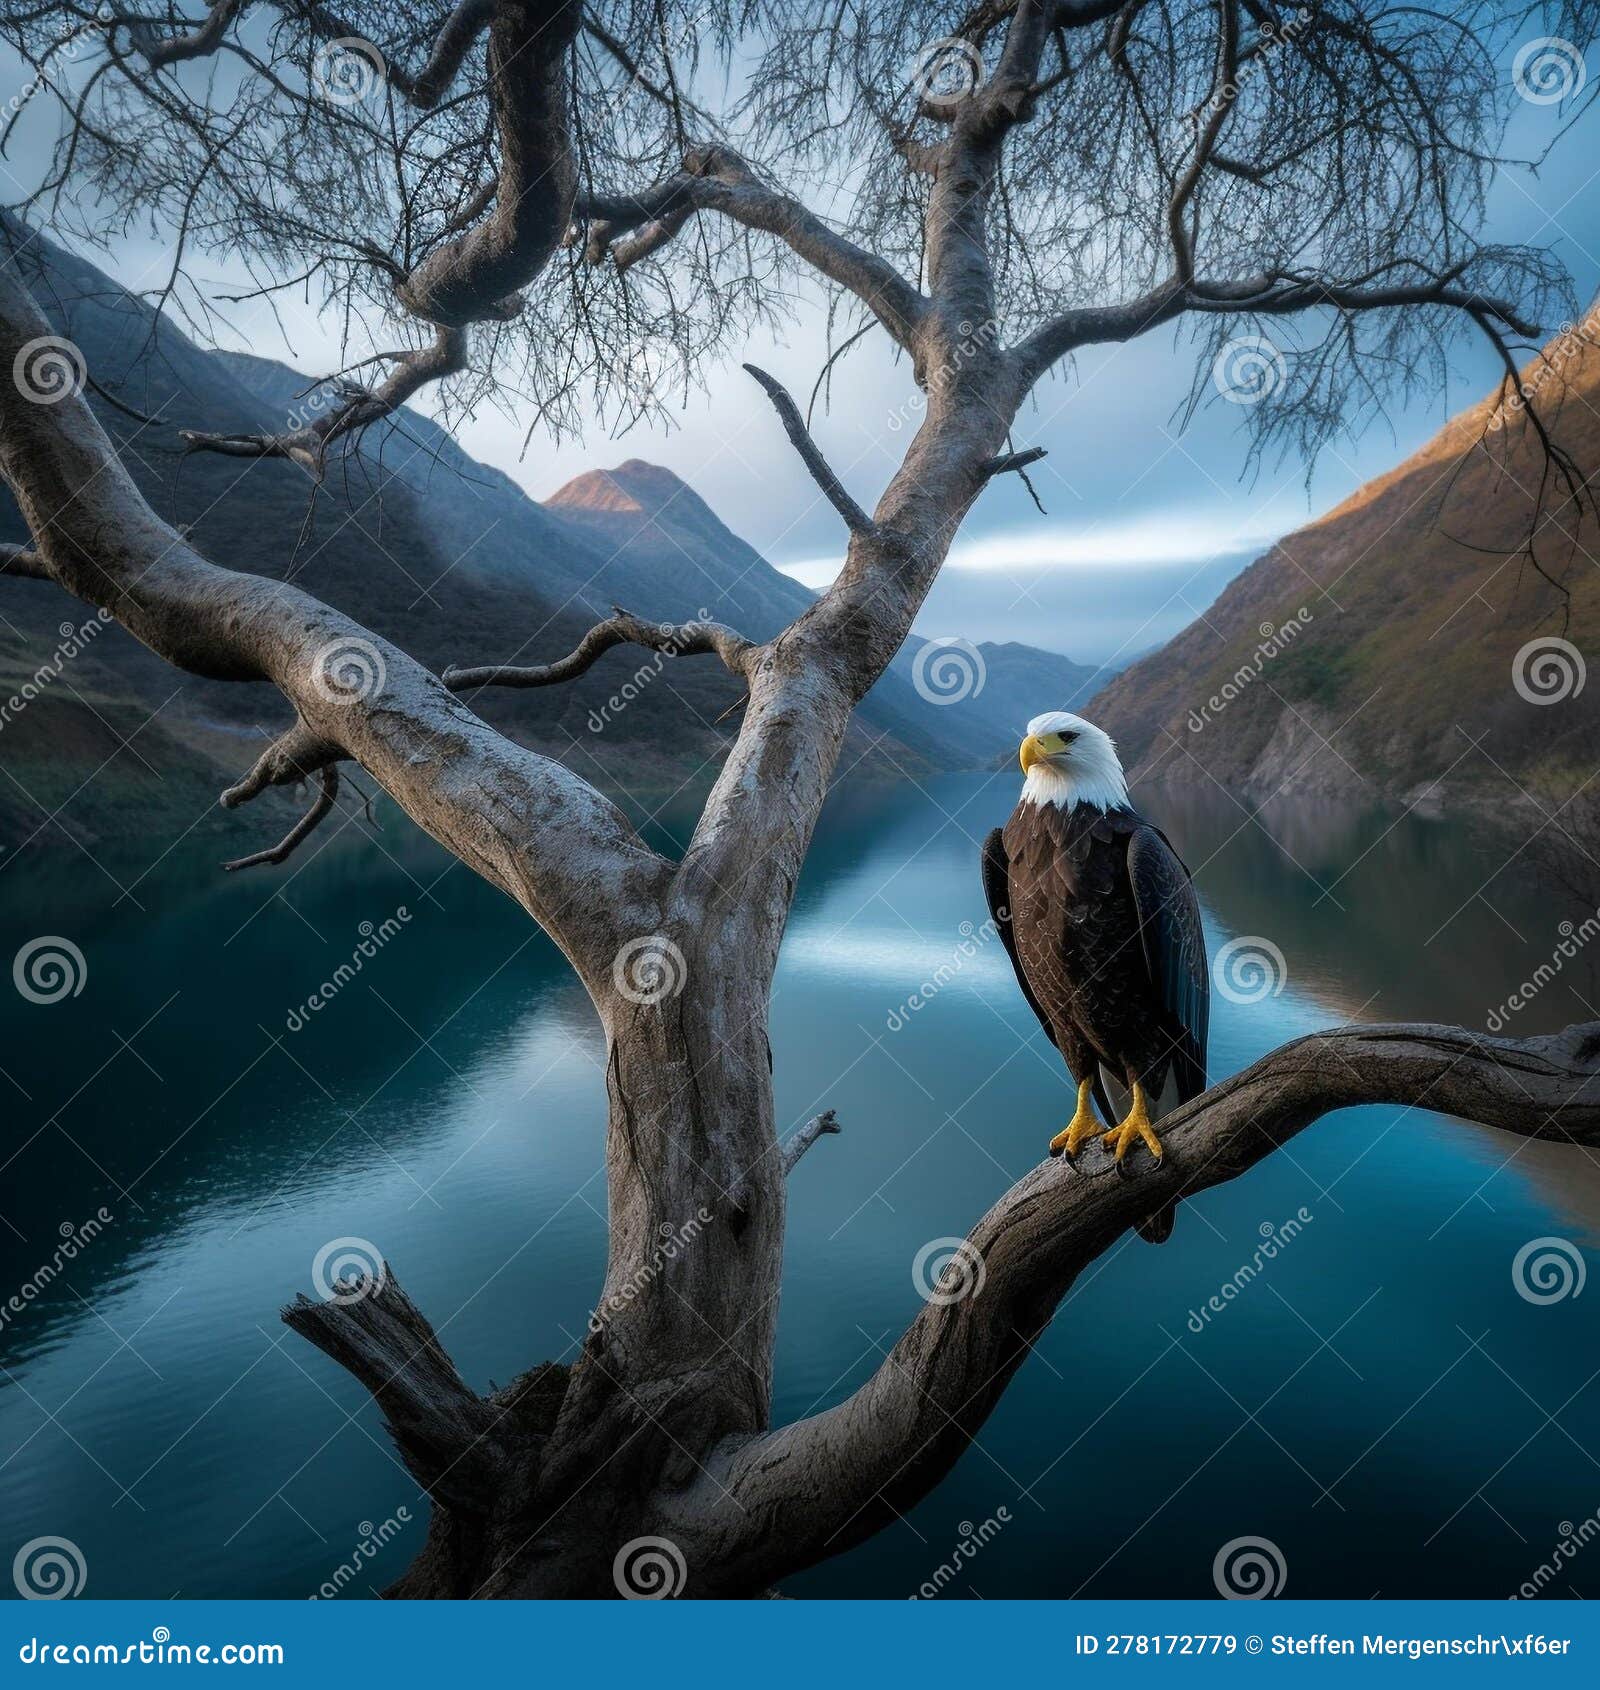 majestic bald eagle overlooking river at sunrise